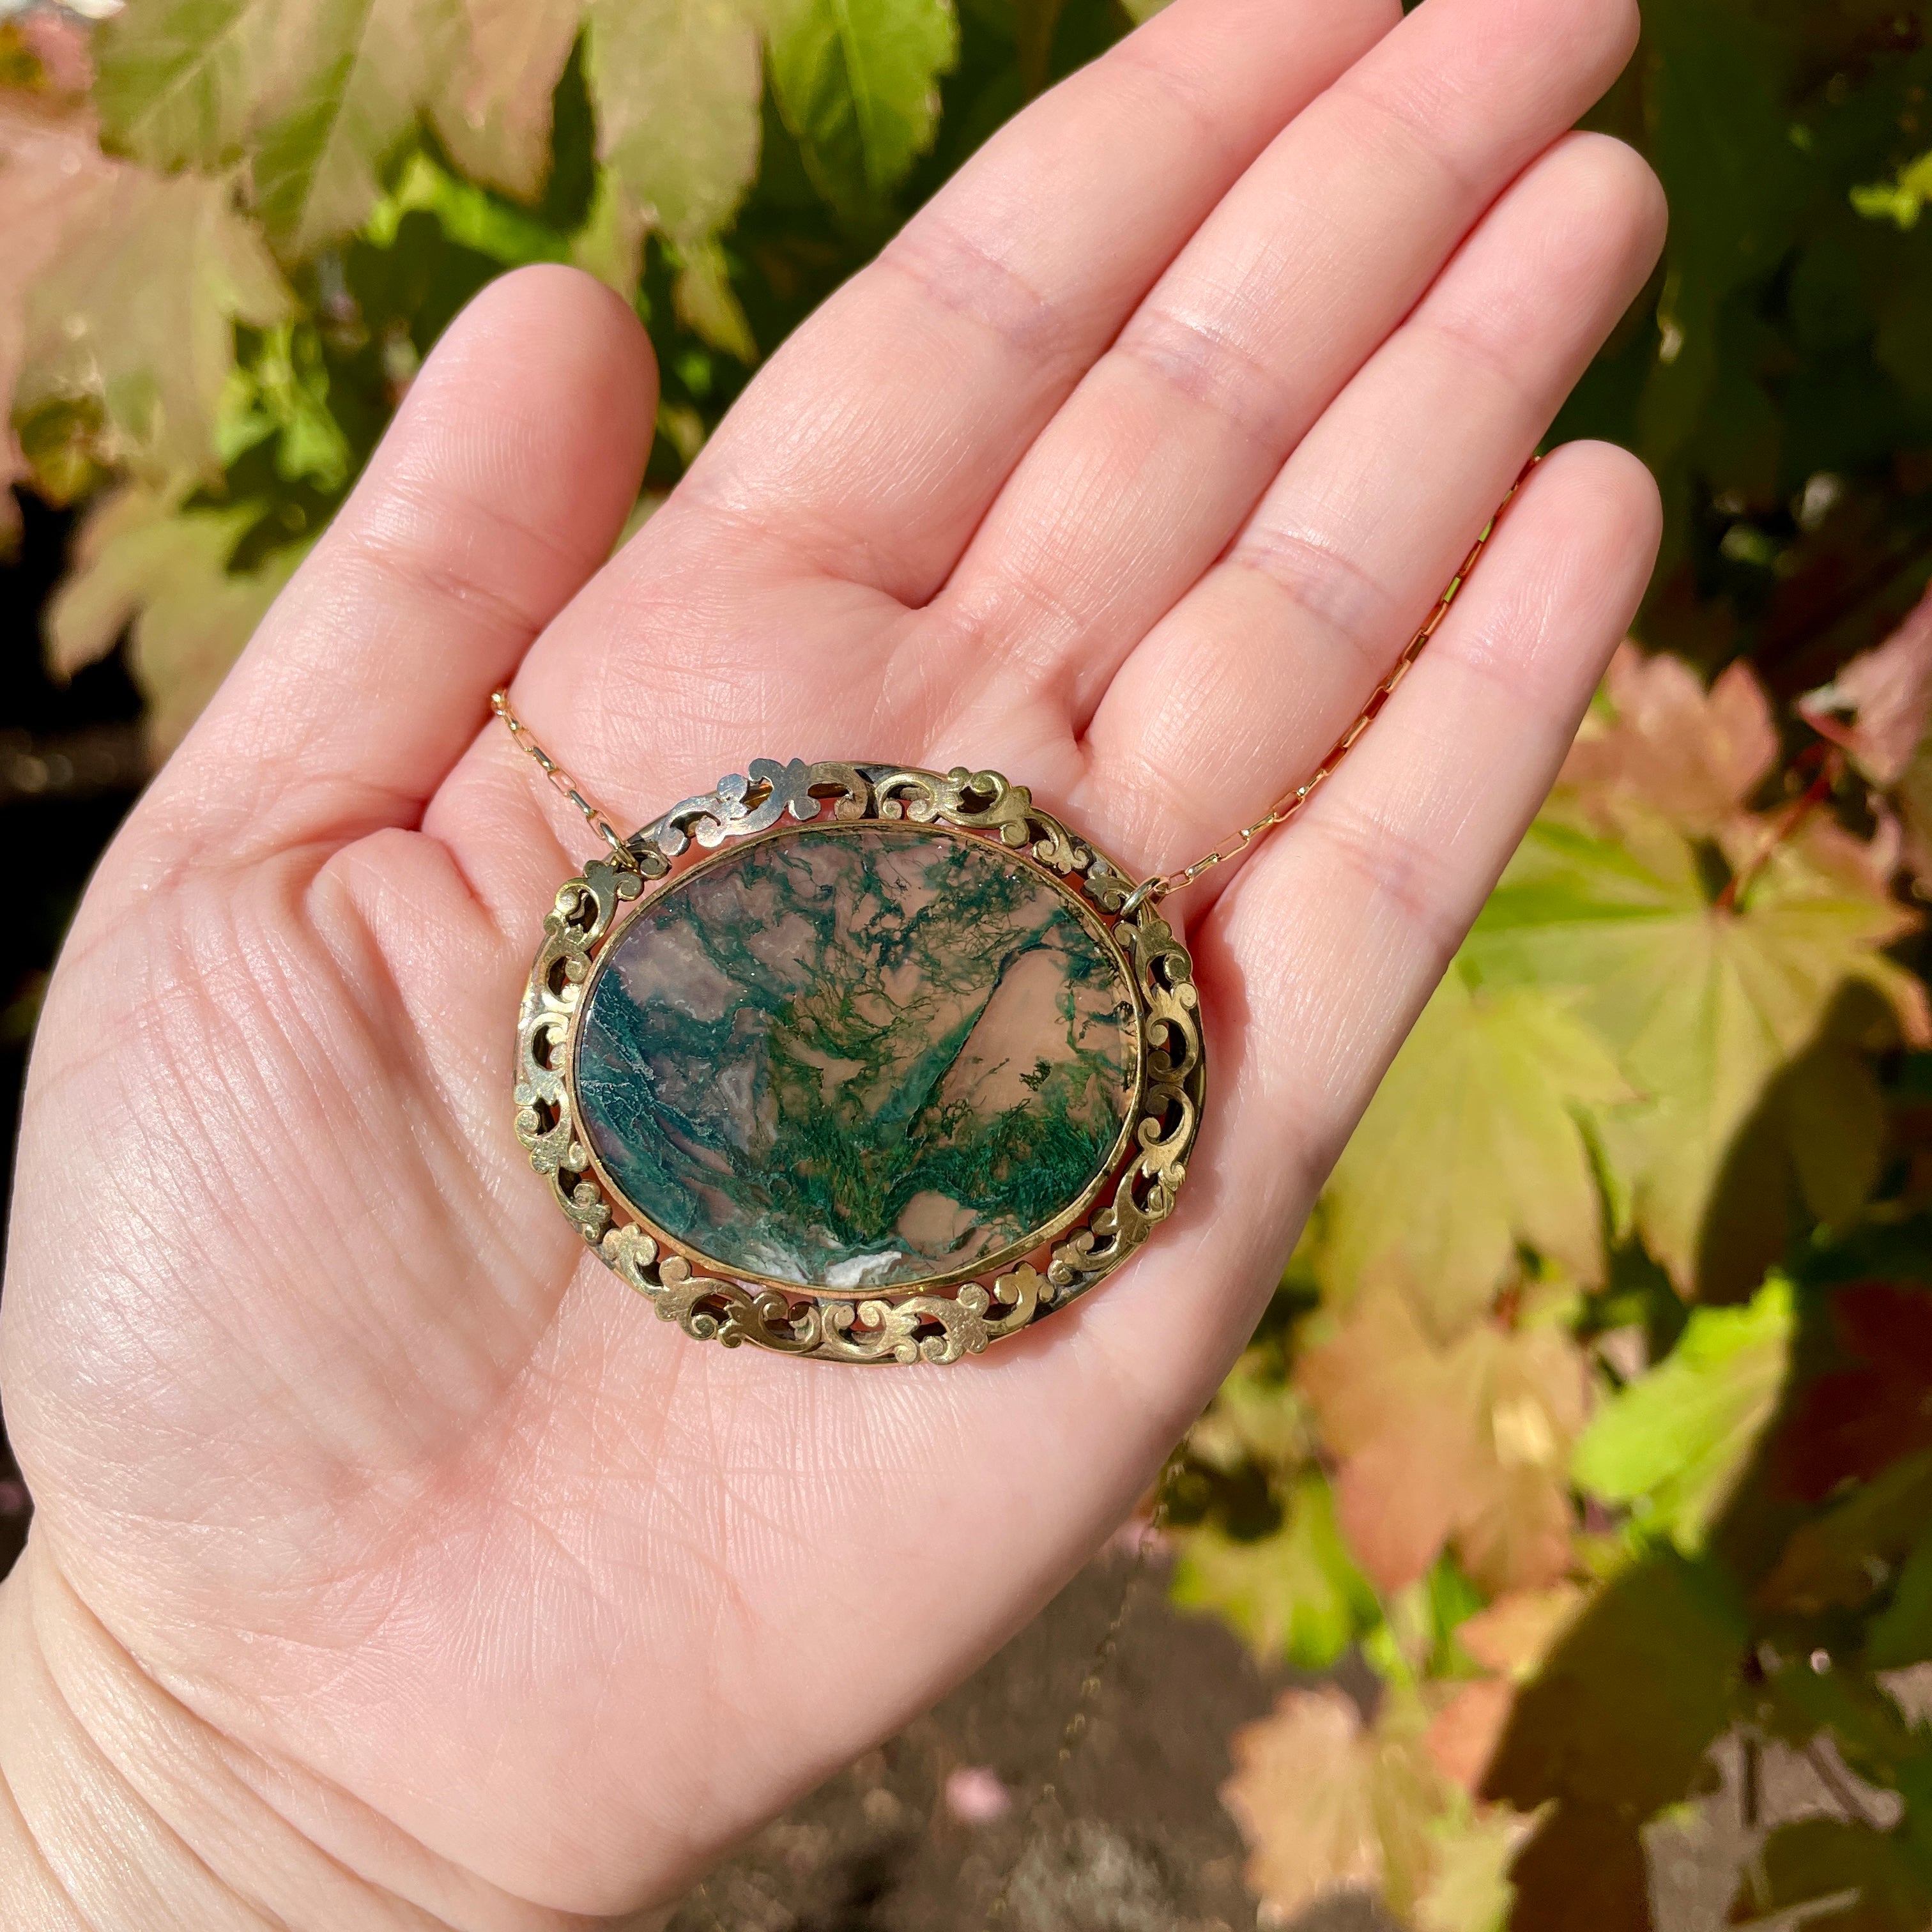 Necklace made of jade, agate and green rutile quartz bea… | Drouot.com